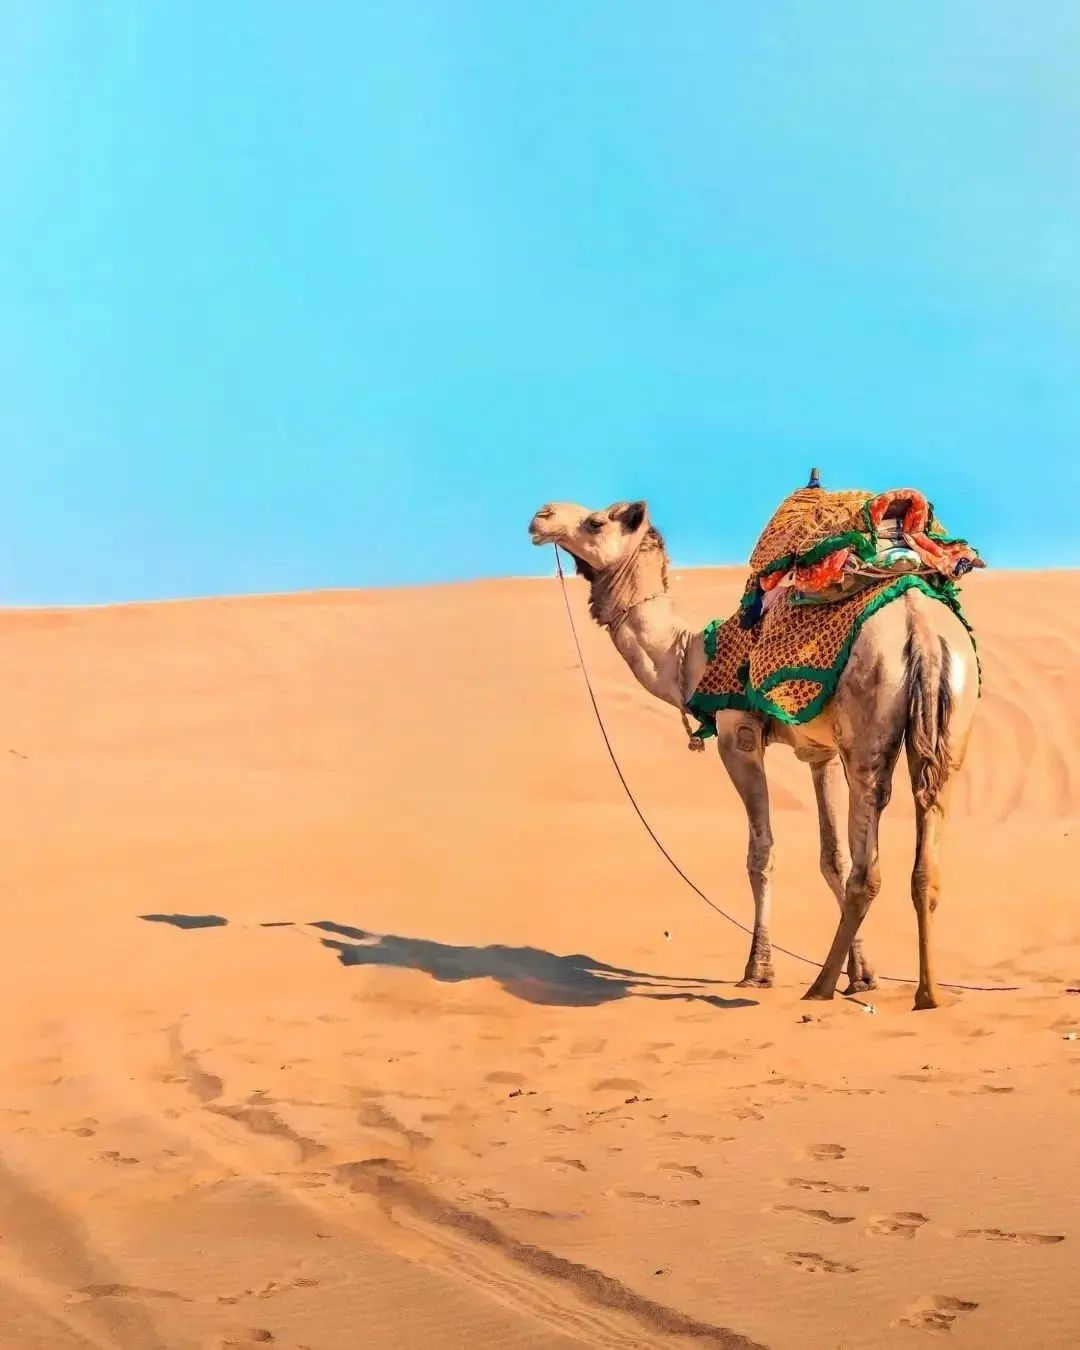 9,717 Camel Wallpaper Images, Stock Photos & Vectors | Shutterstock